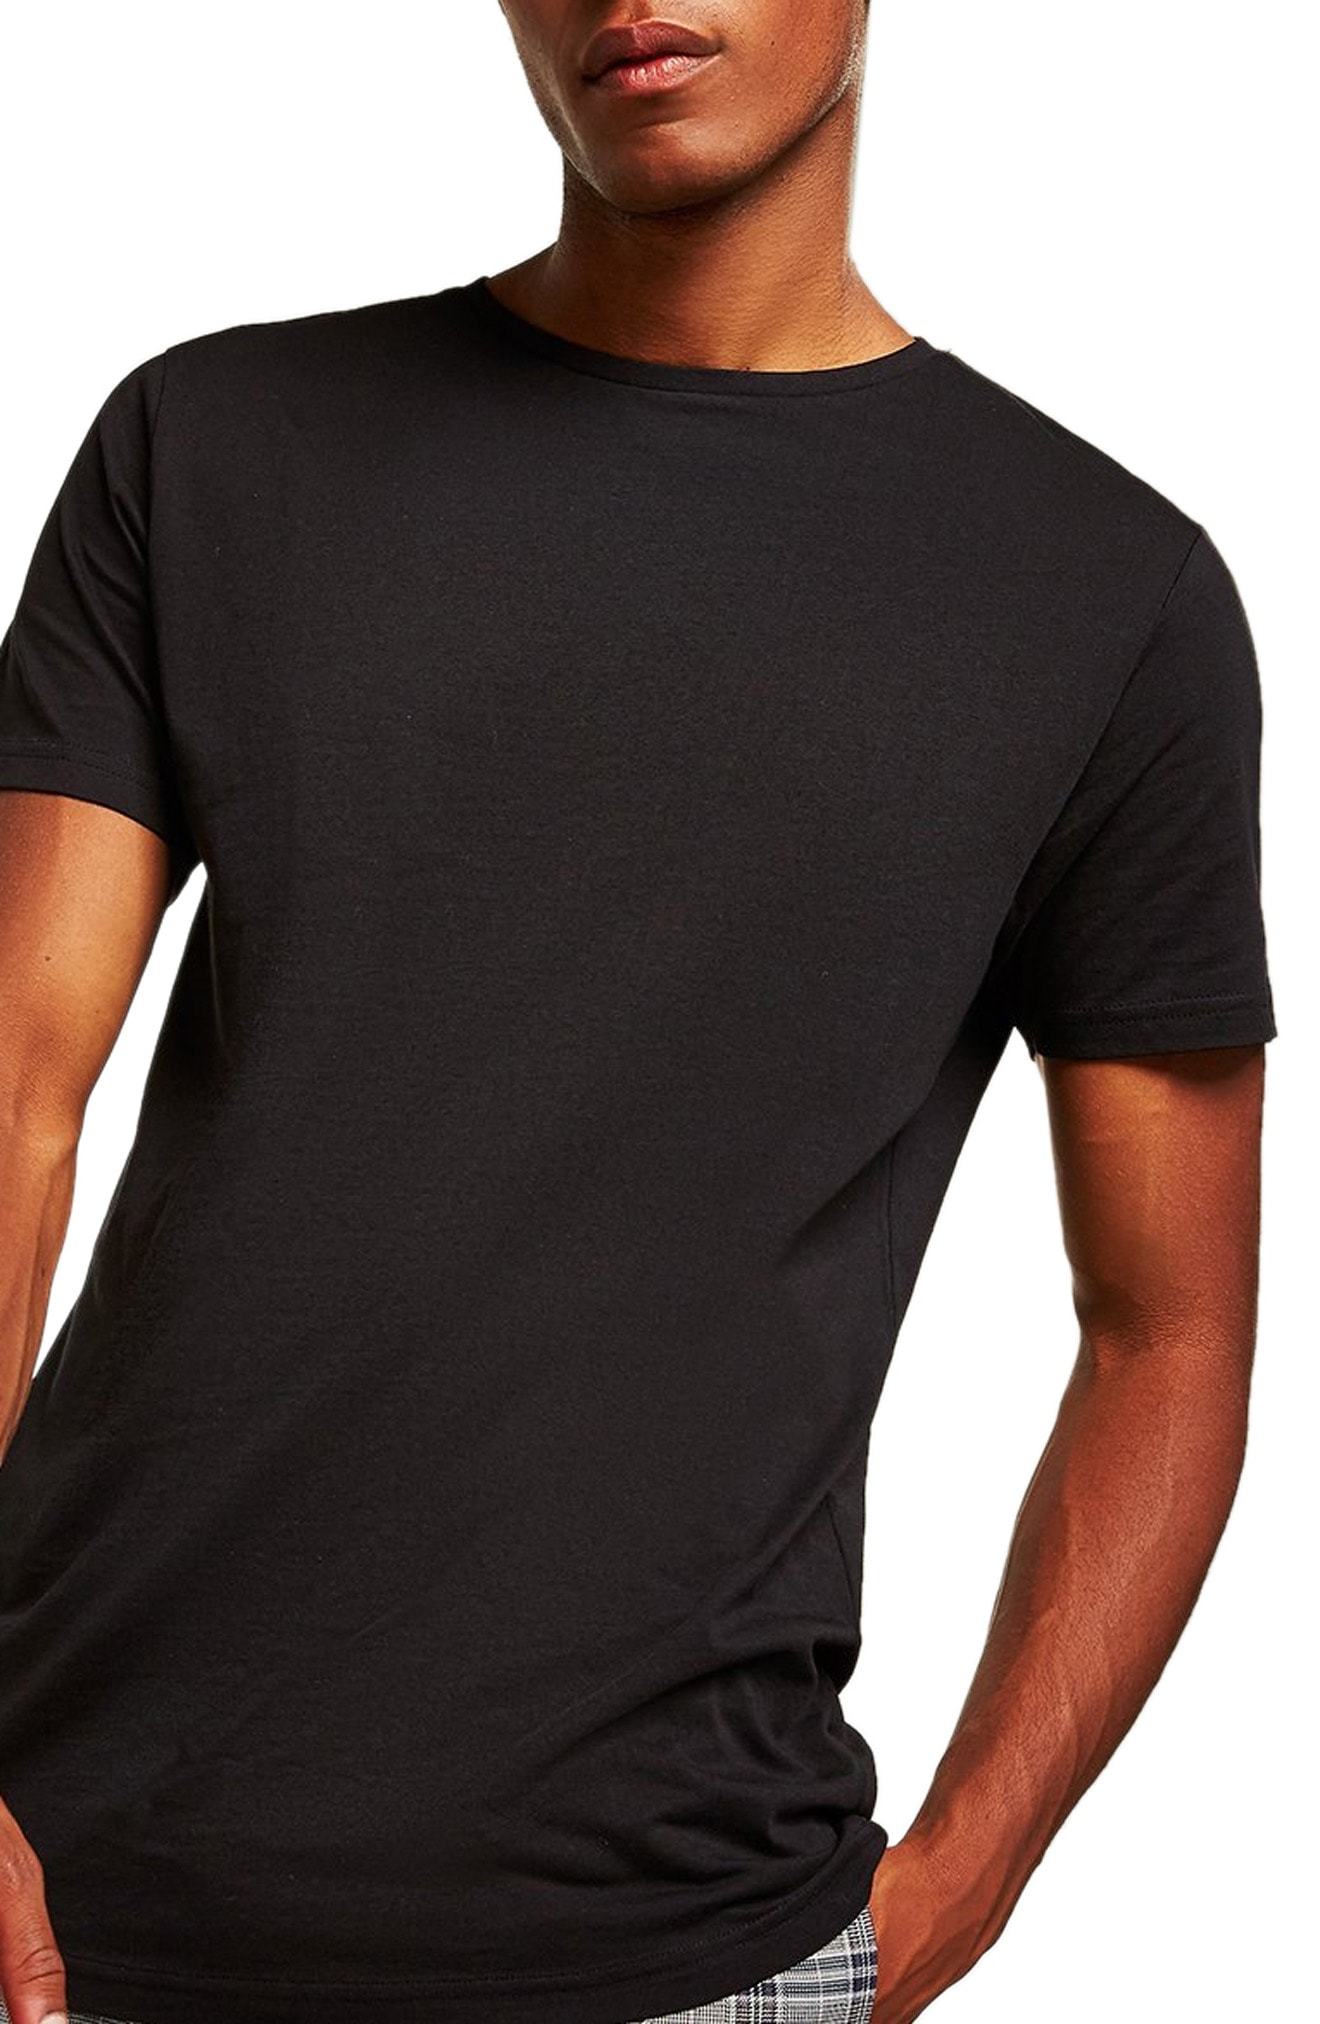 Topman Longline T Shirt, $20, Nordstrom